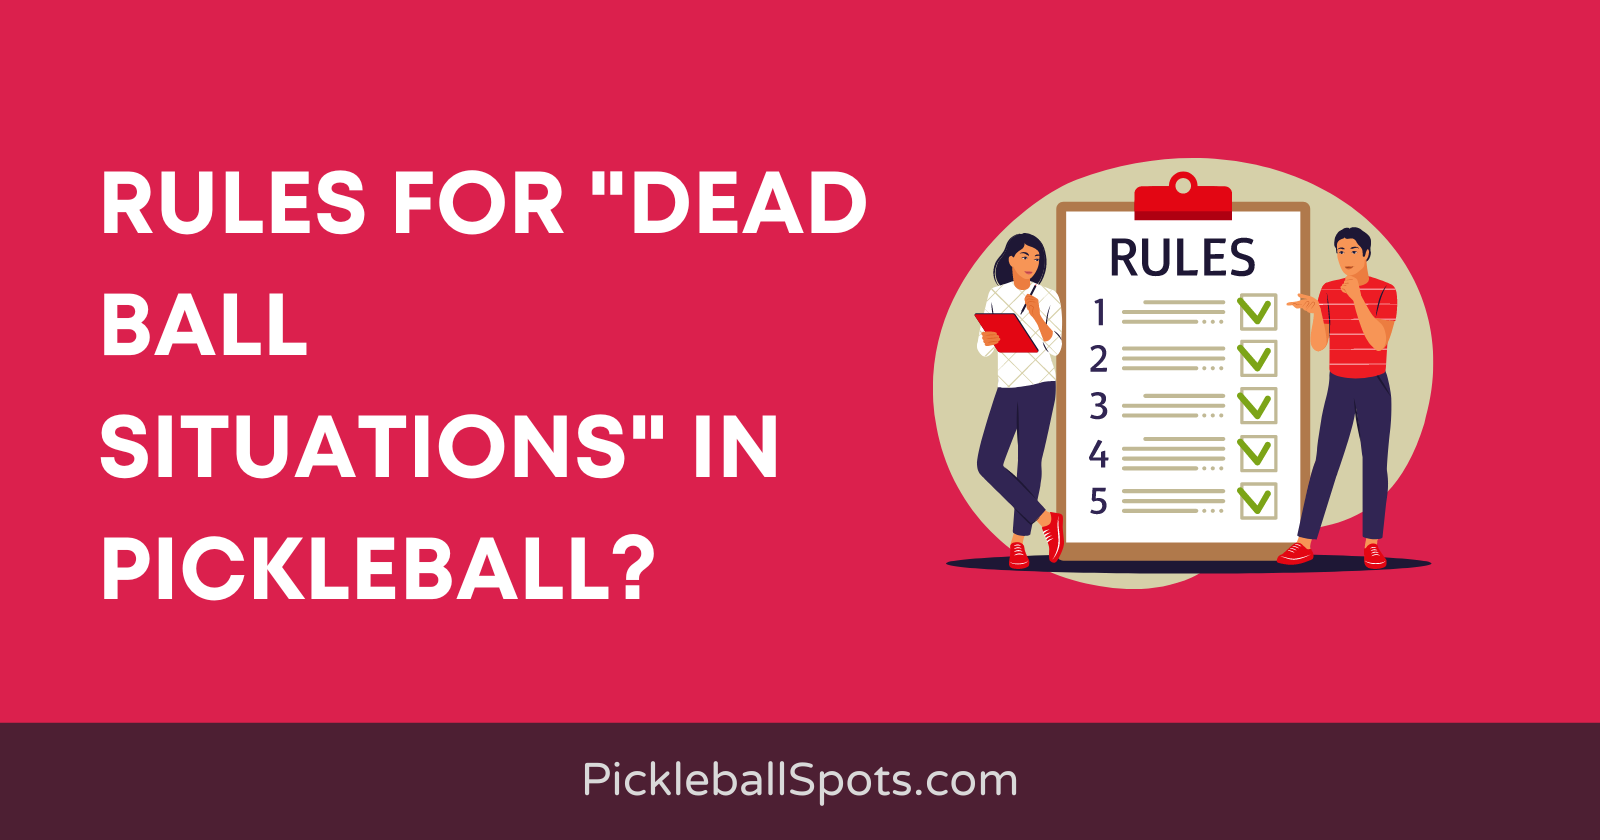 Dead Ball Rules In Pickleball